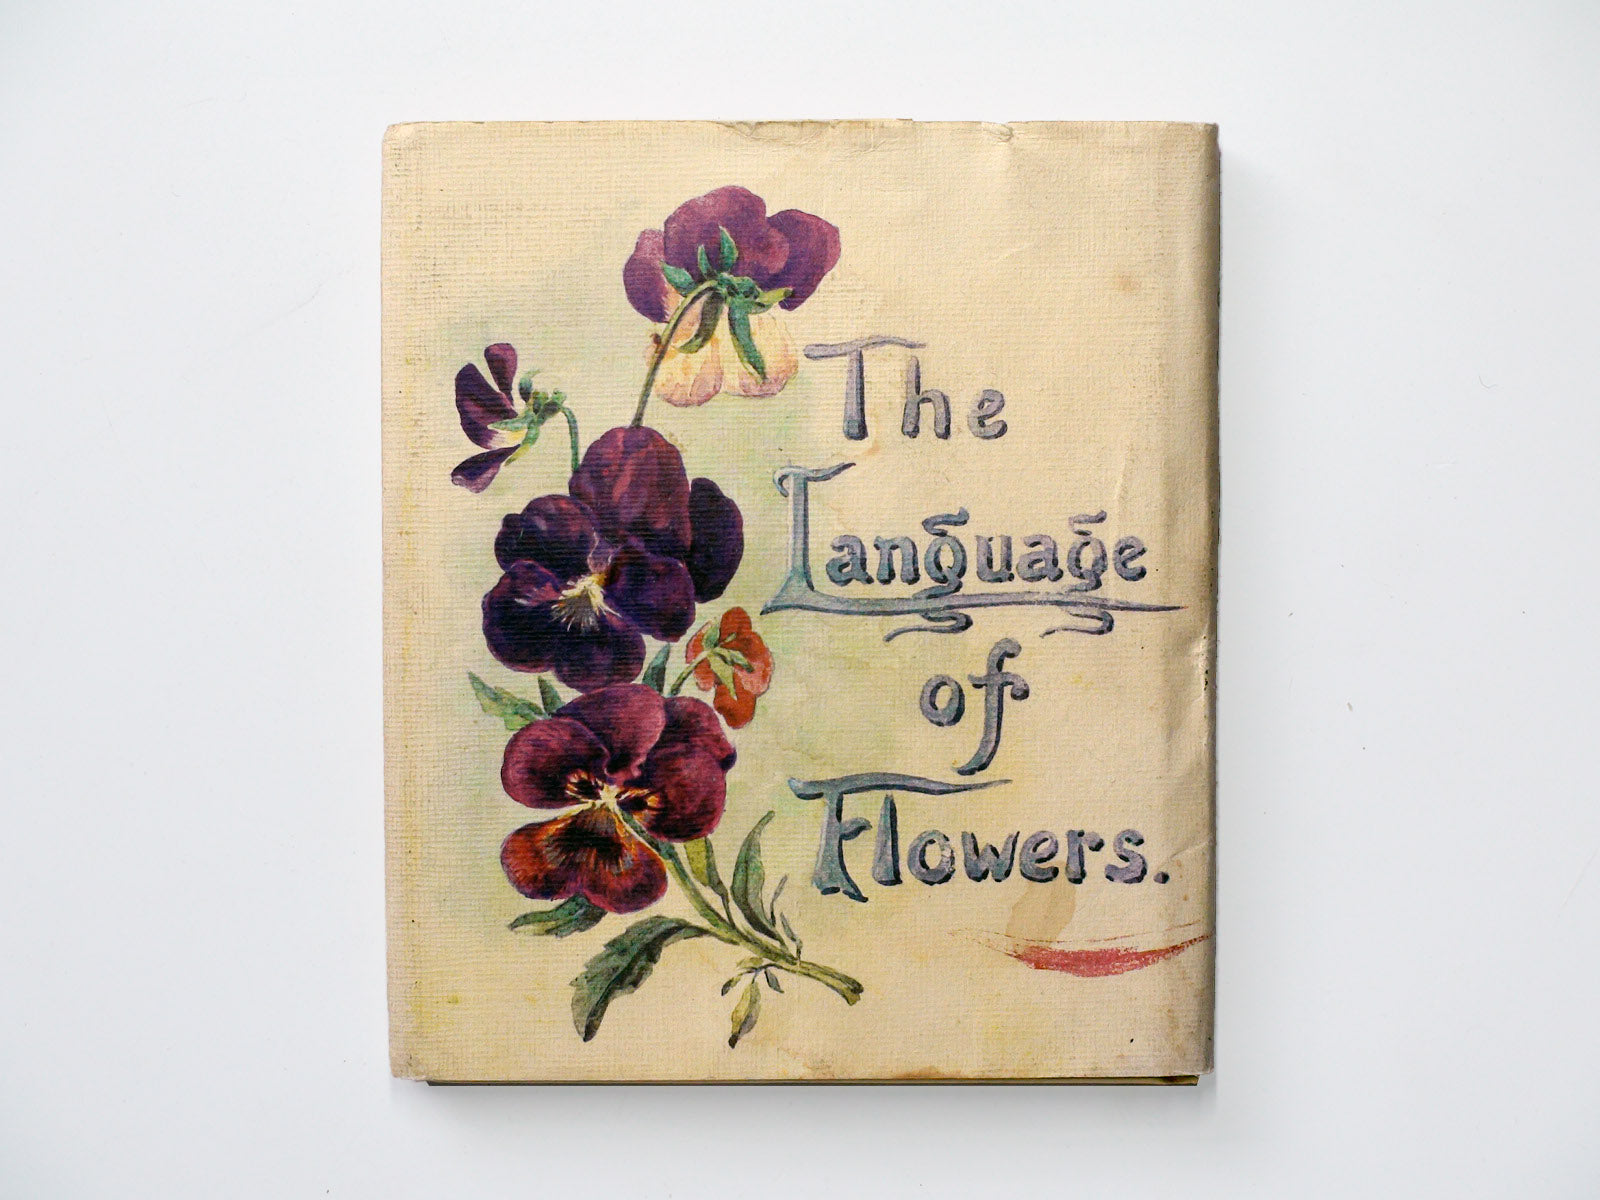 The Language of Flowers, Illustrated, 1913 Facsimile, Illustrated, 1987